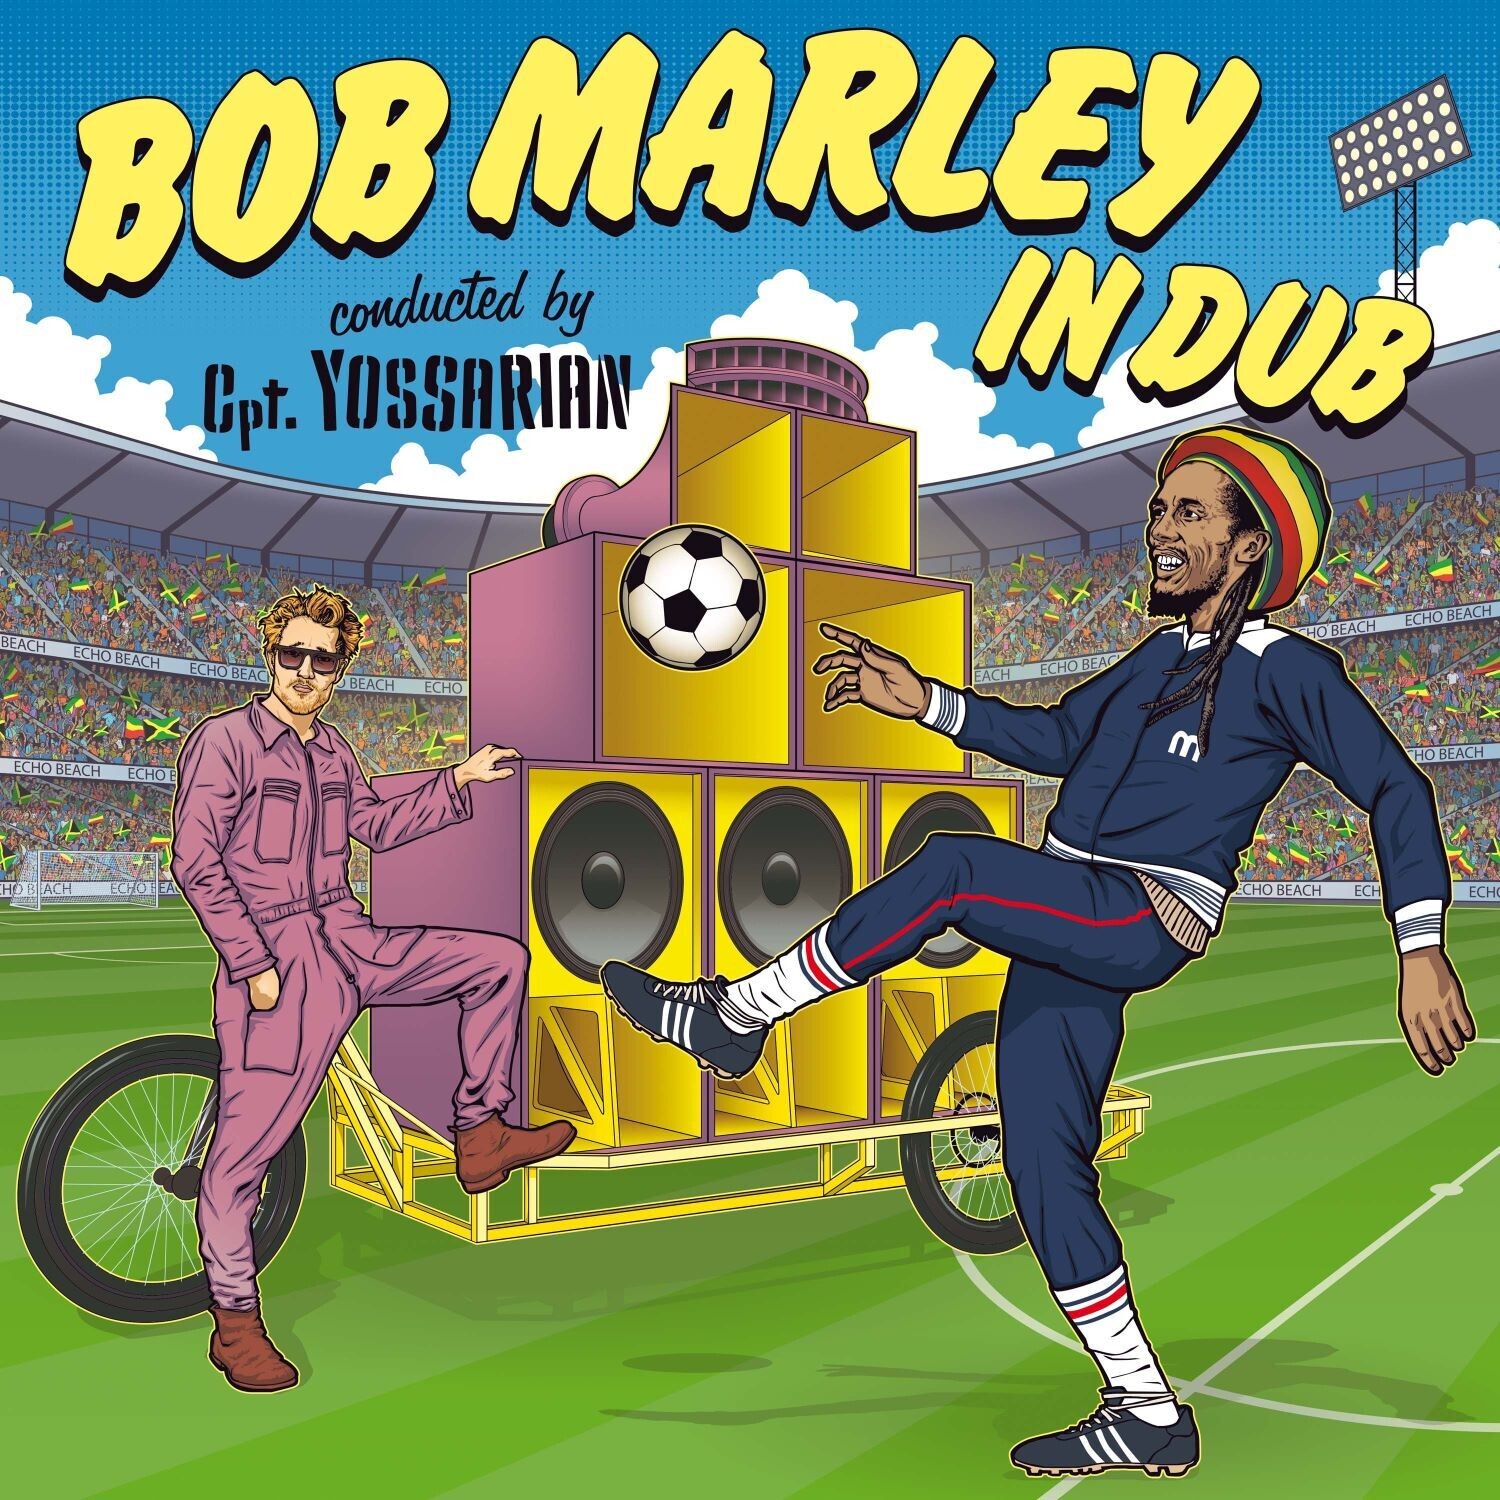 CD Cpt. Yossarian / Bob Marley In Dub